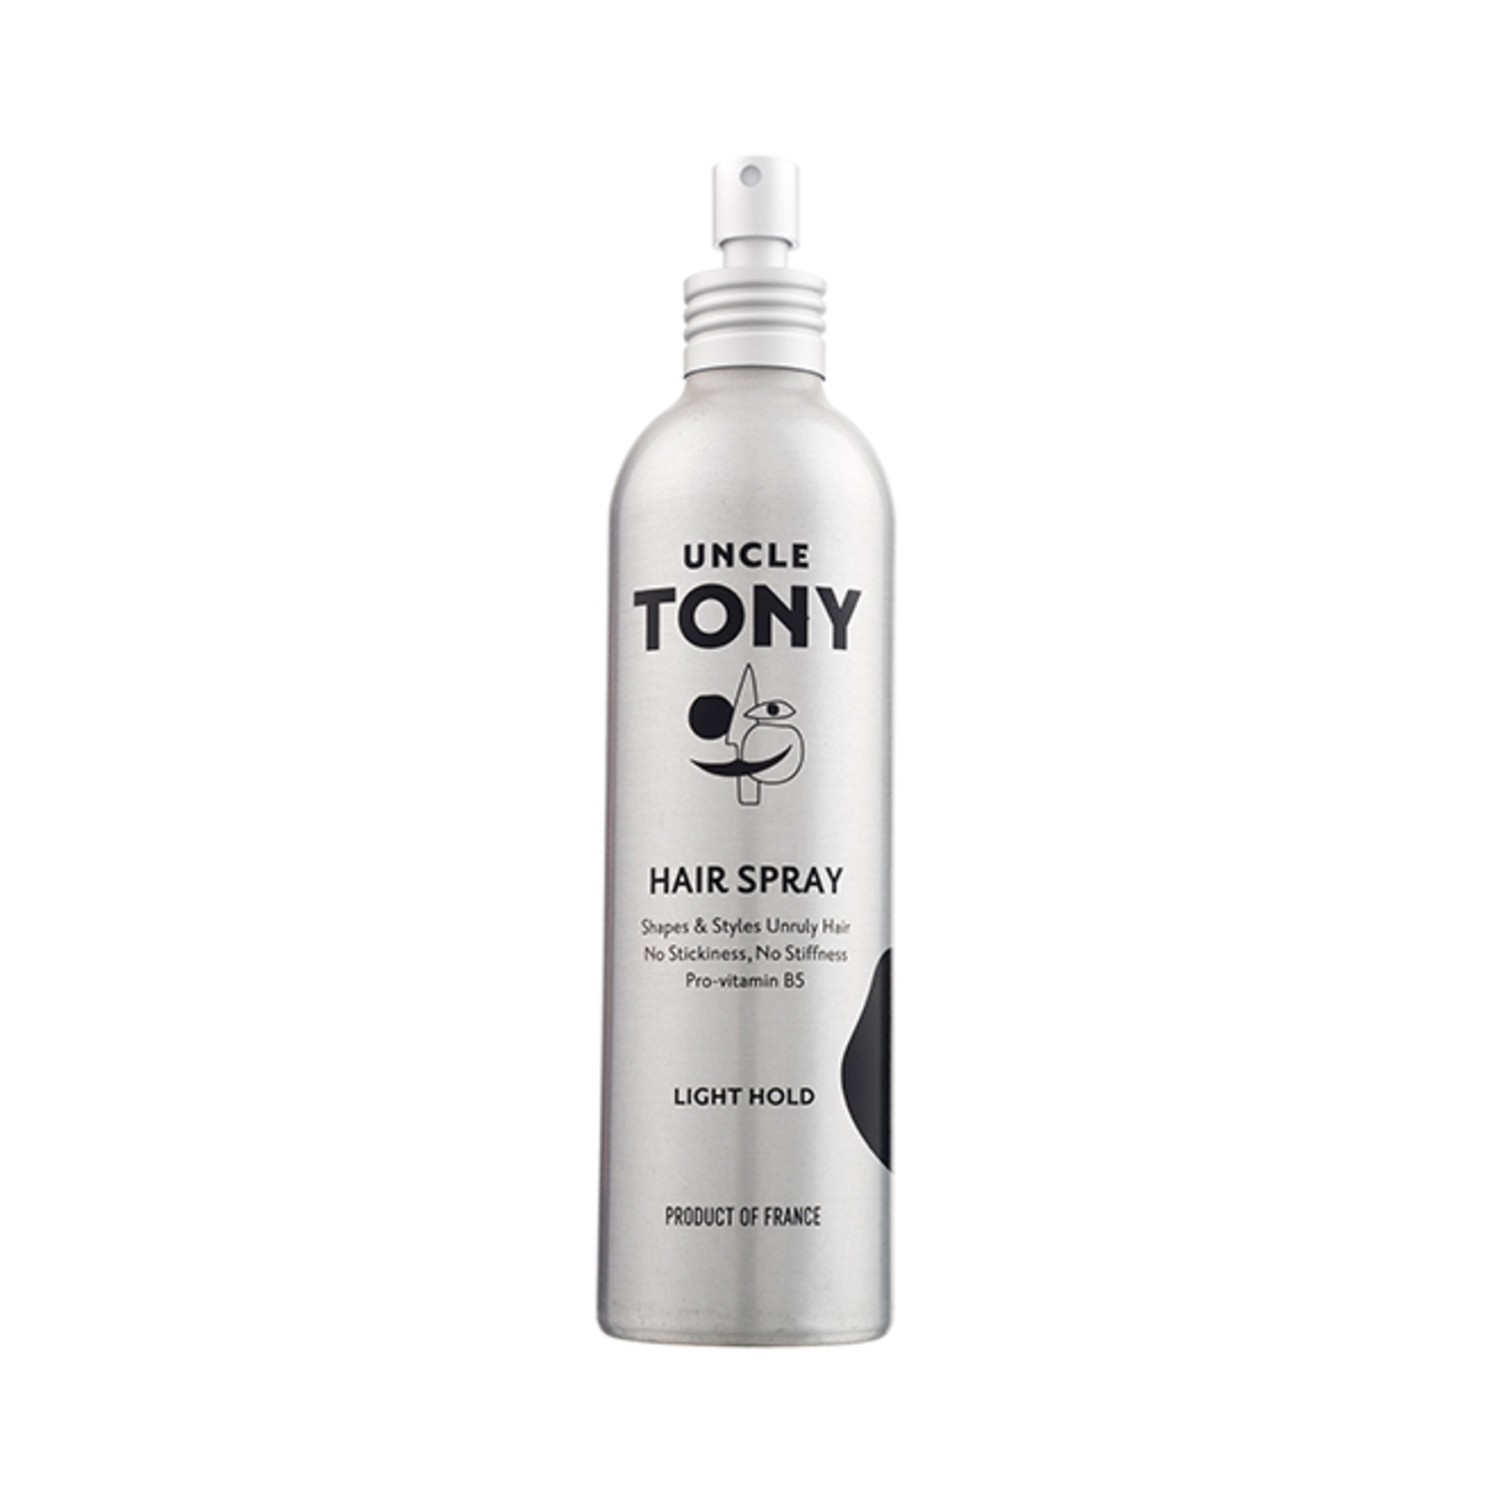 Uncle Tony Light Hold Hair Spray (150ml)